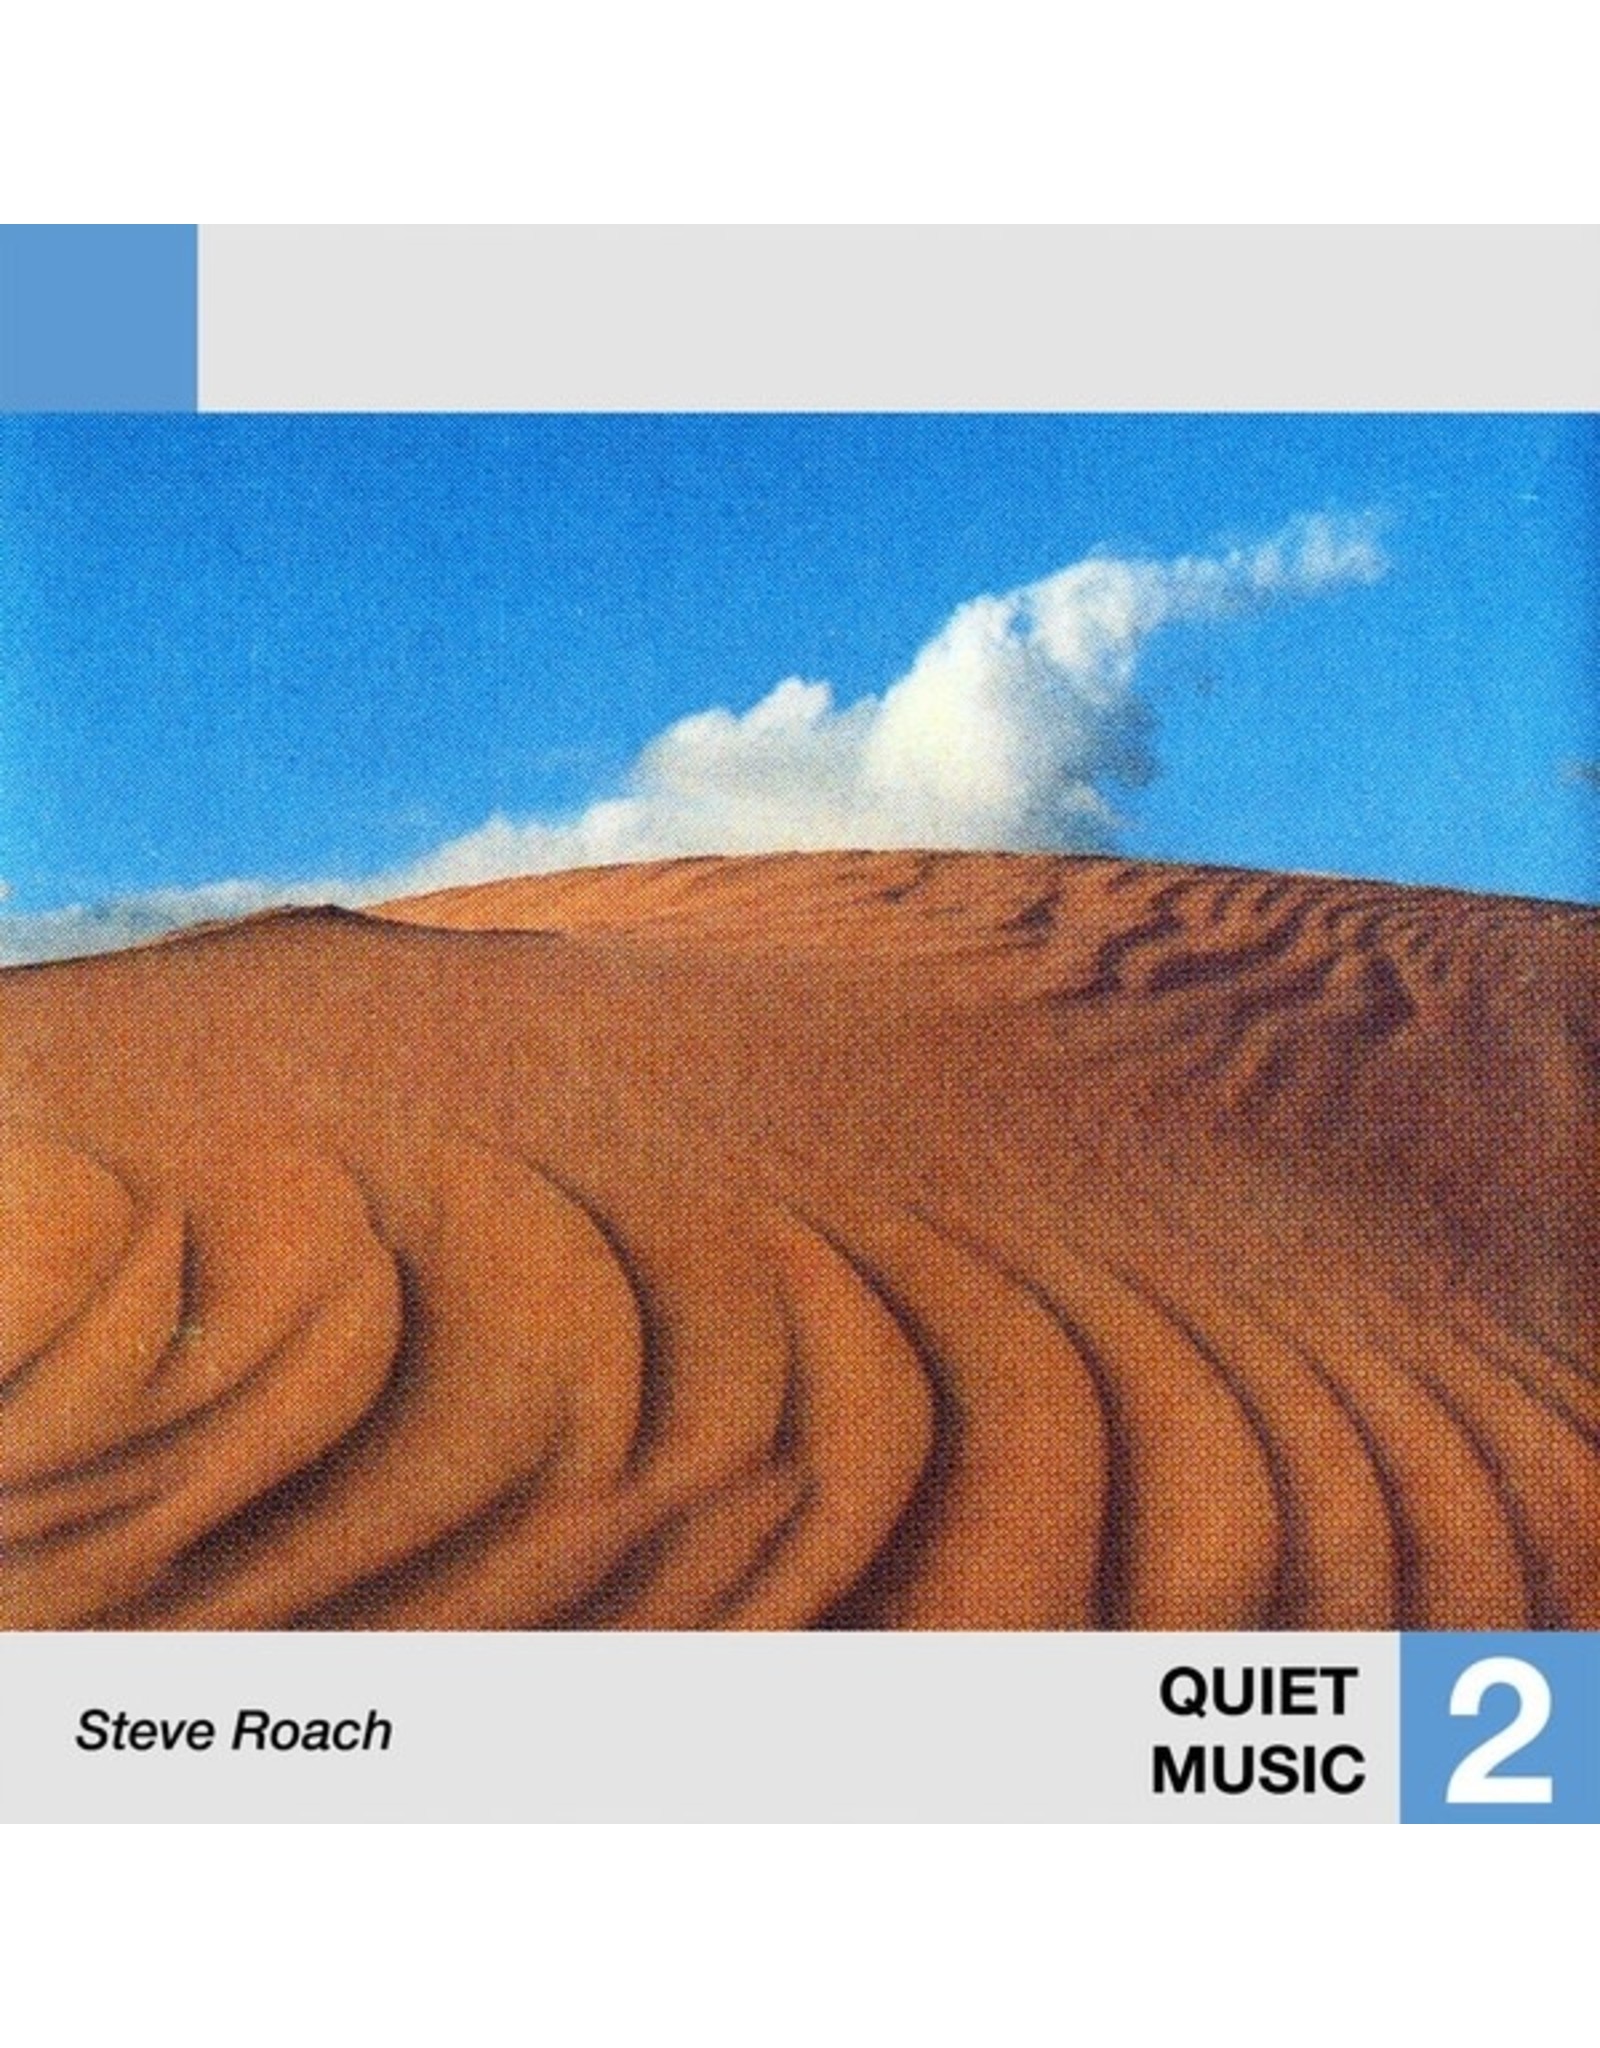 Telephone Explosion Roach, Steve: Quiet Music 2 LP